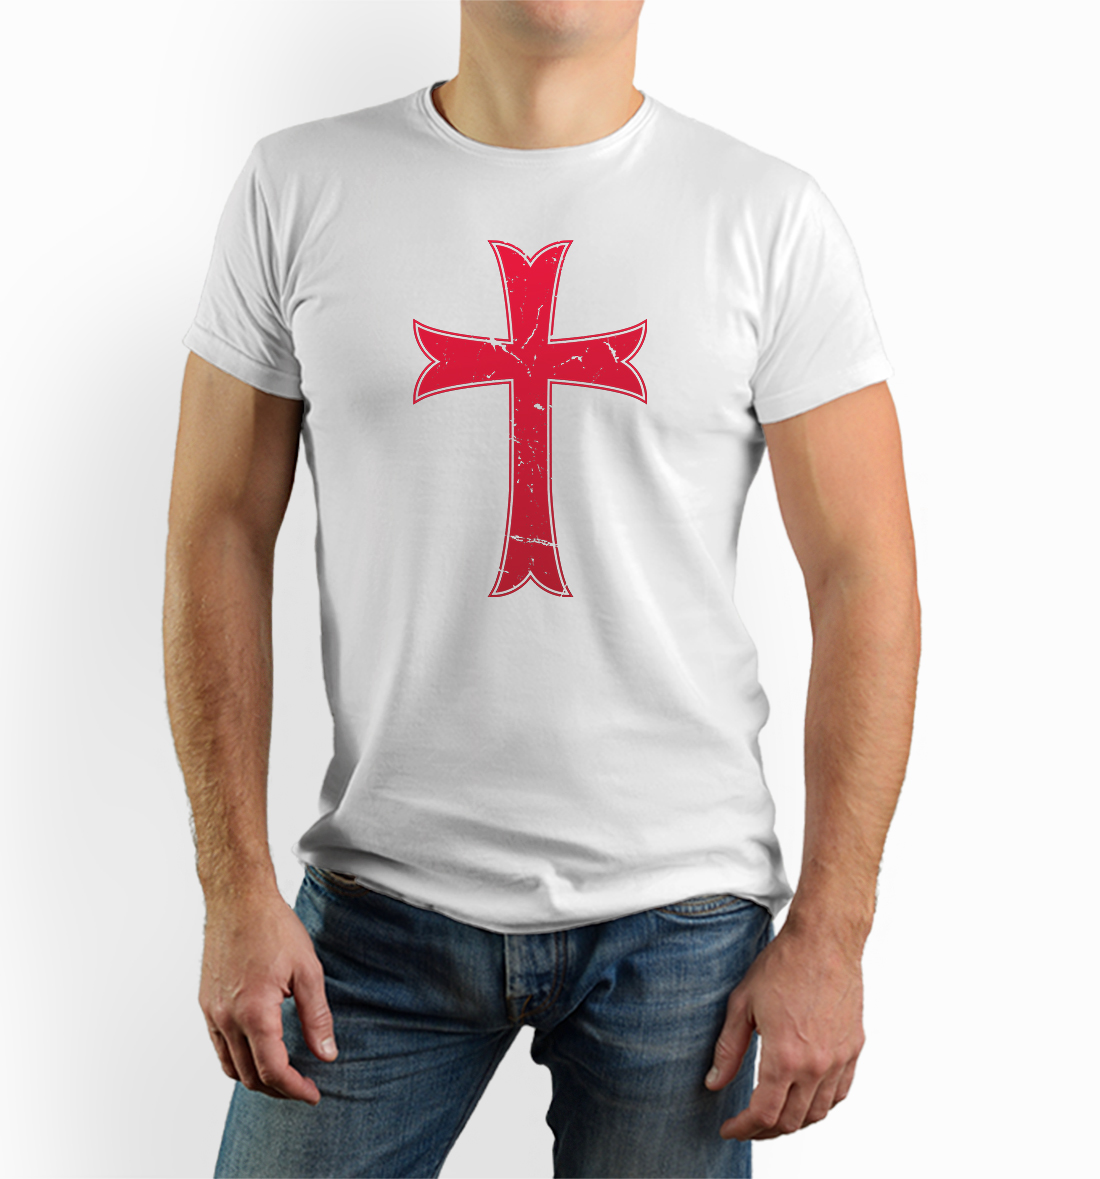 Rytiersky Templársky kríž tričko